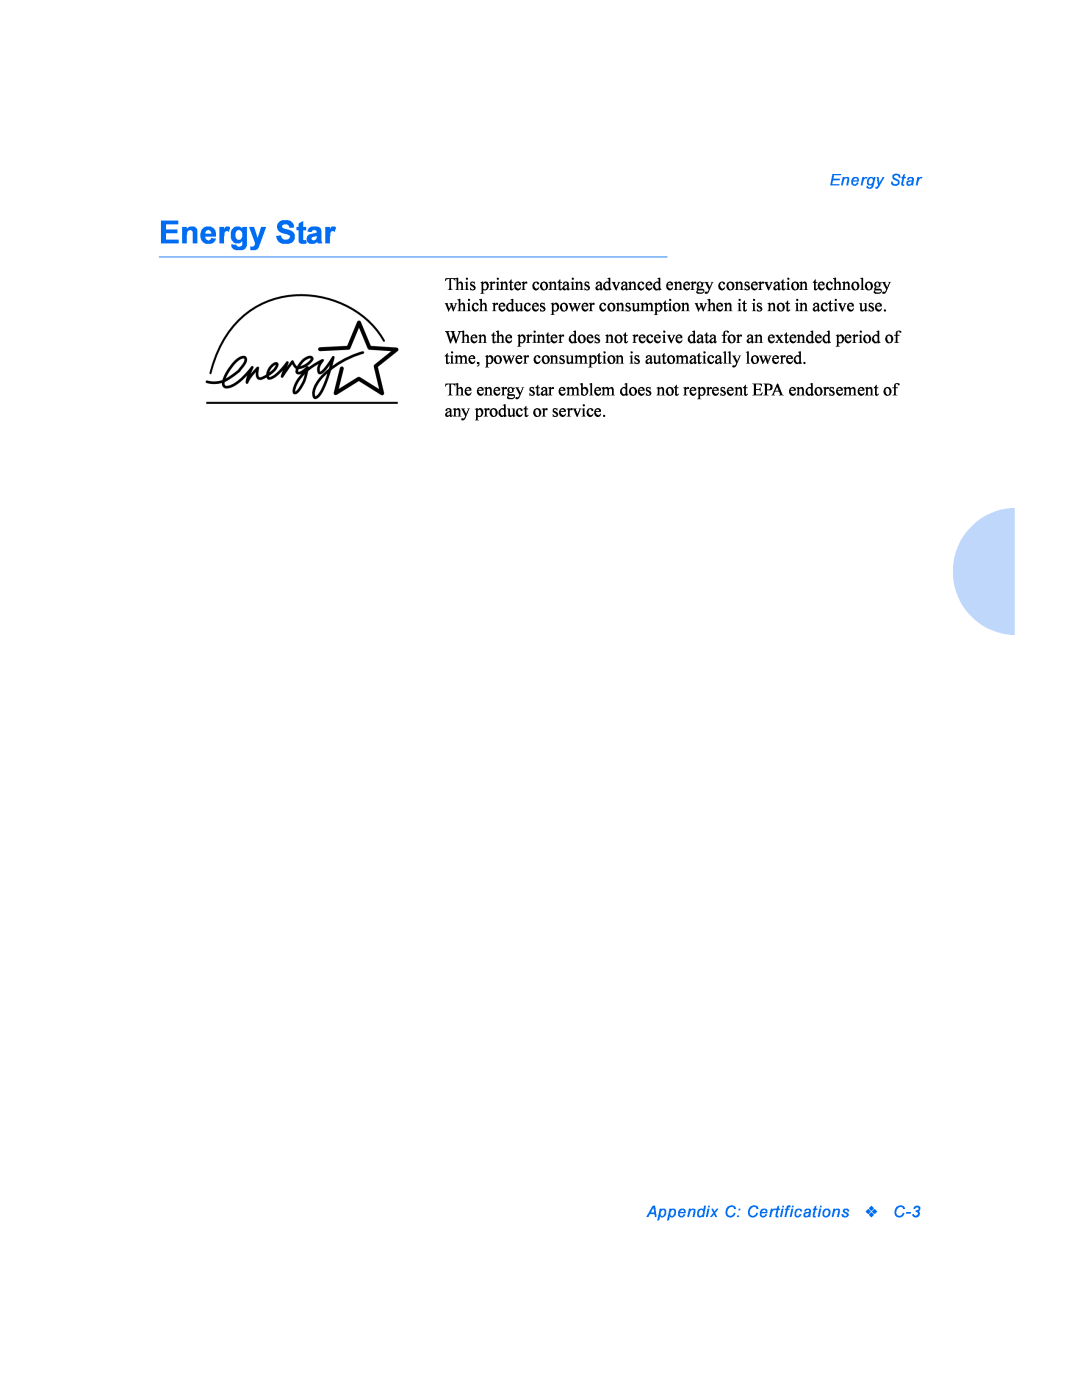 Xerox P8EX manual Energy Star, Appendix C: Certifications 